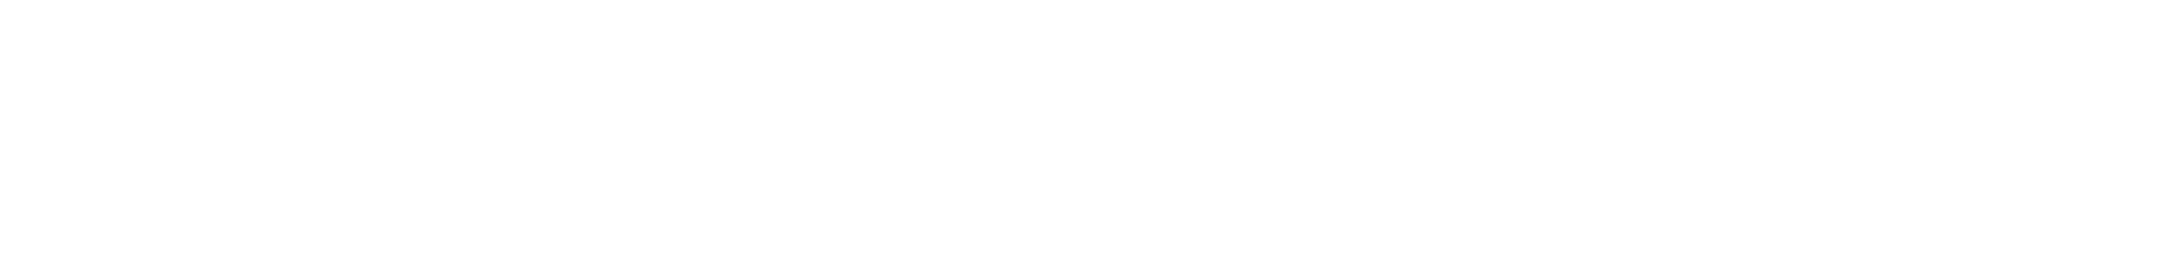 Arm SystemReady logo